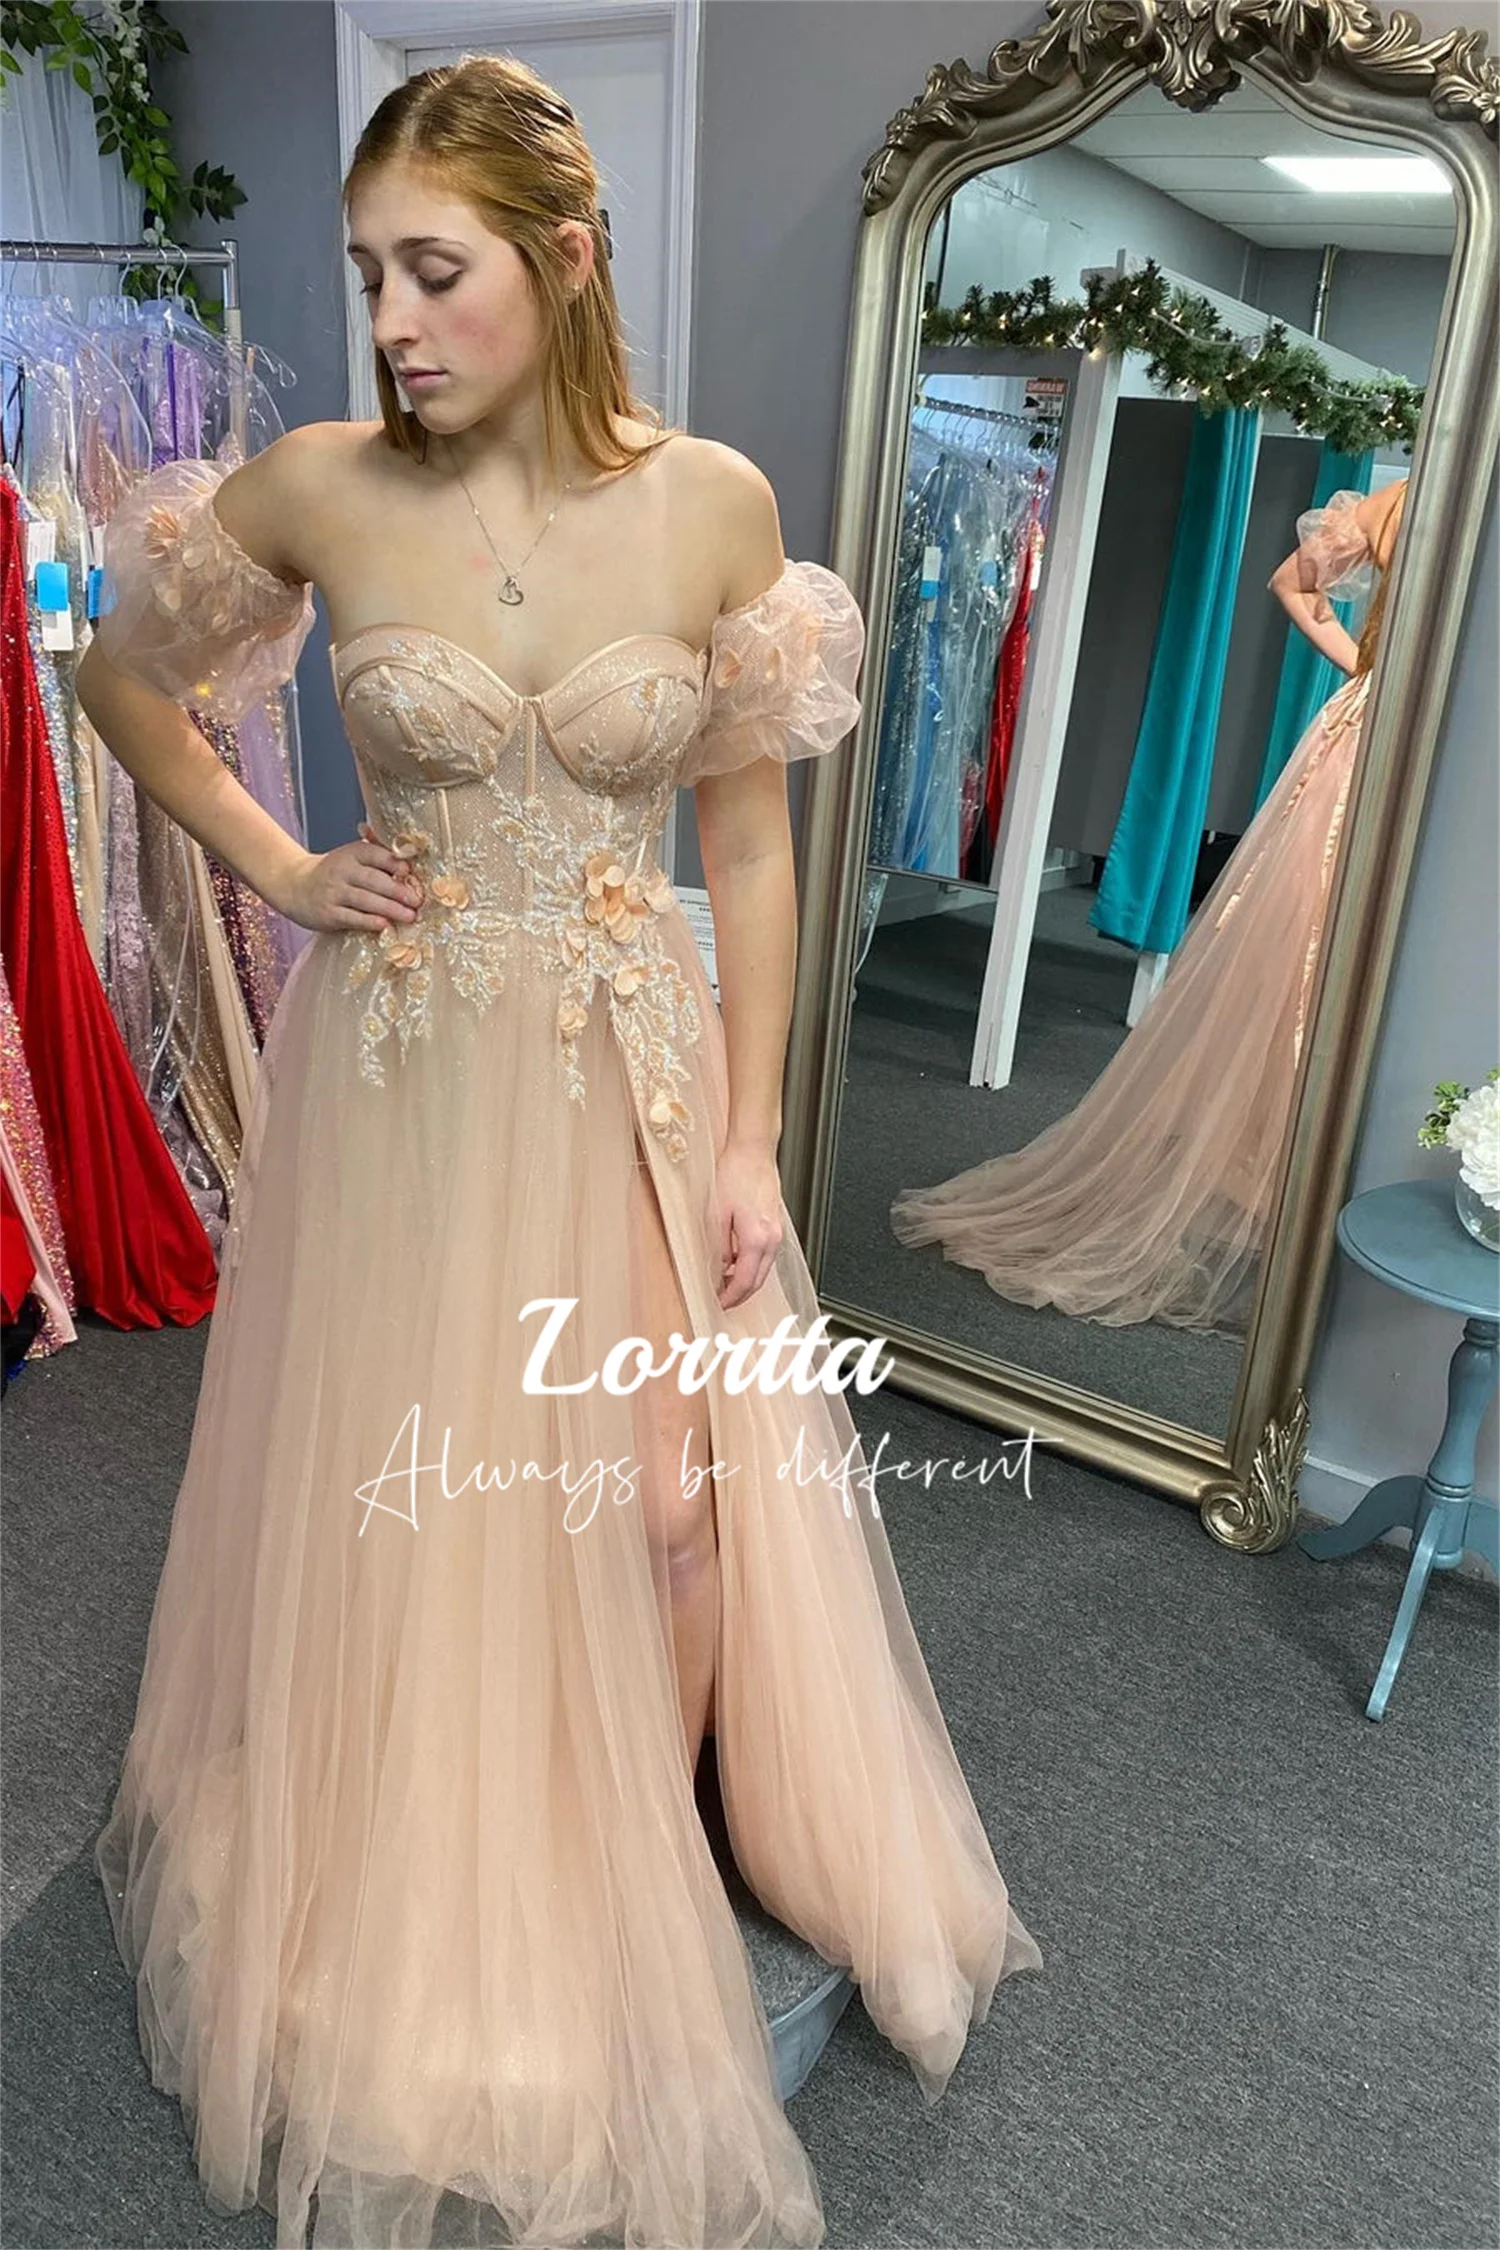 

Lorrtta Applique Side Slit Removable Sleeves Wedding Party Dress Champagne Sweetheart Neckline Dresses for Prom Elegant Girls